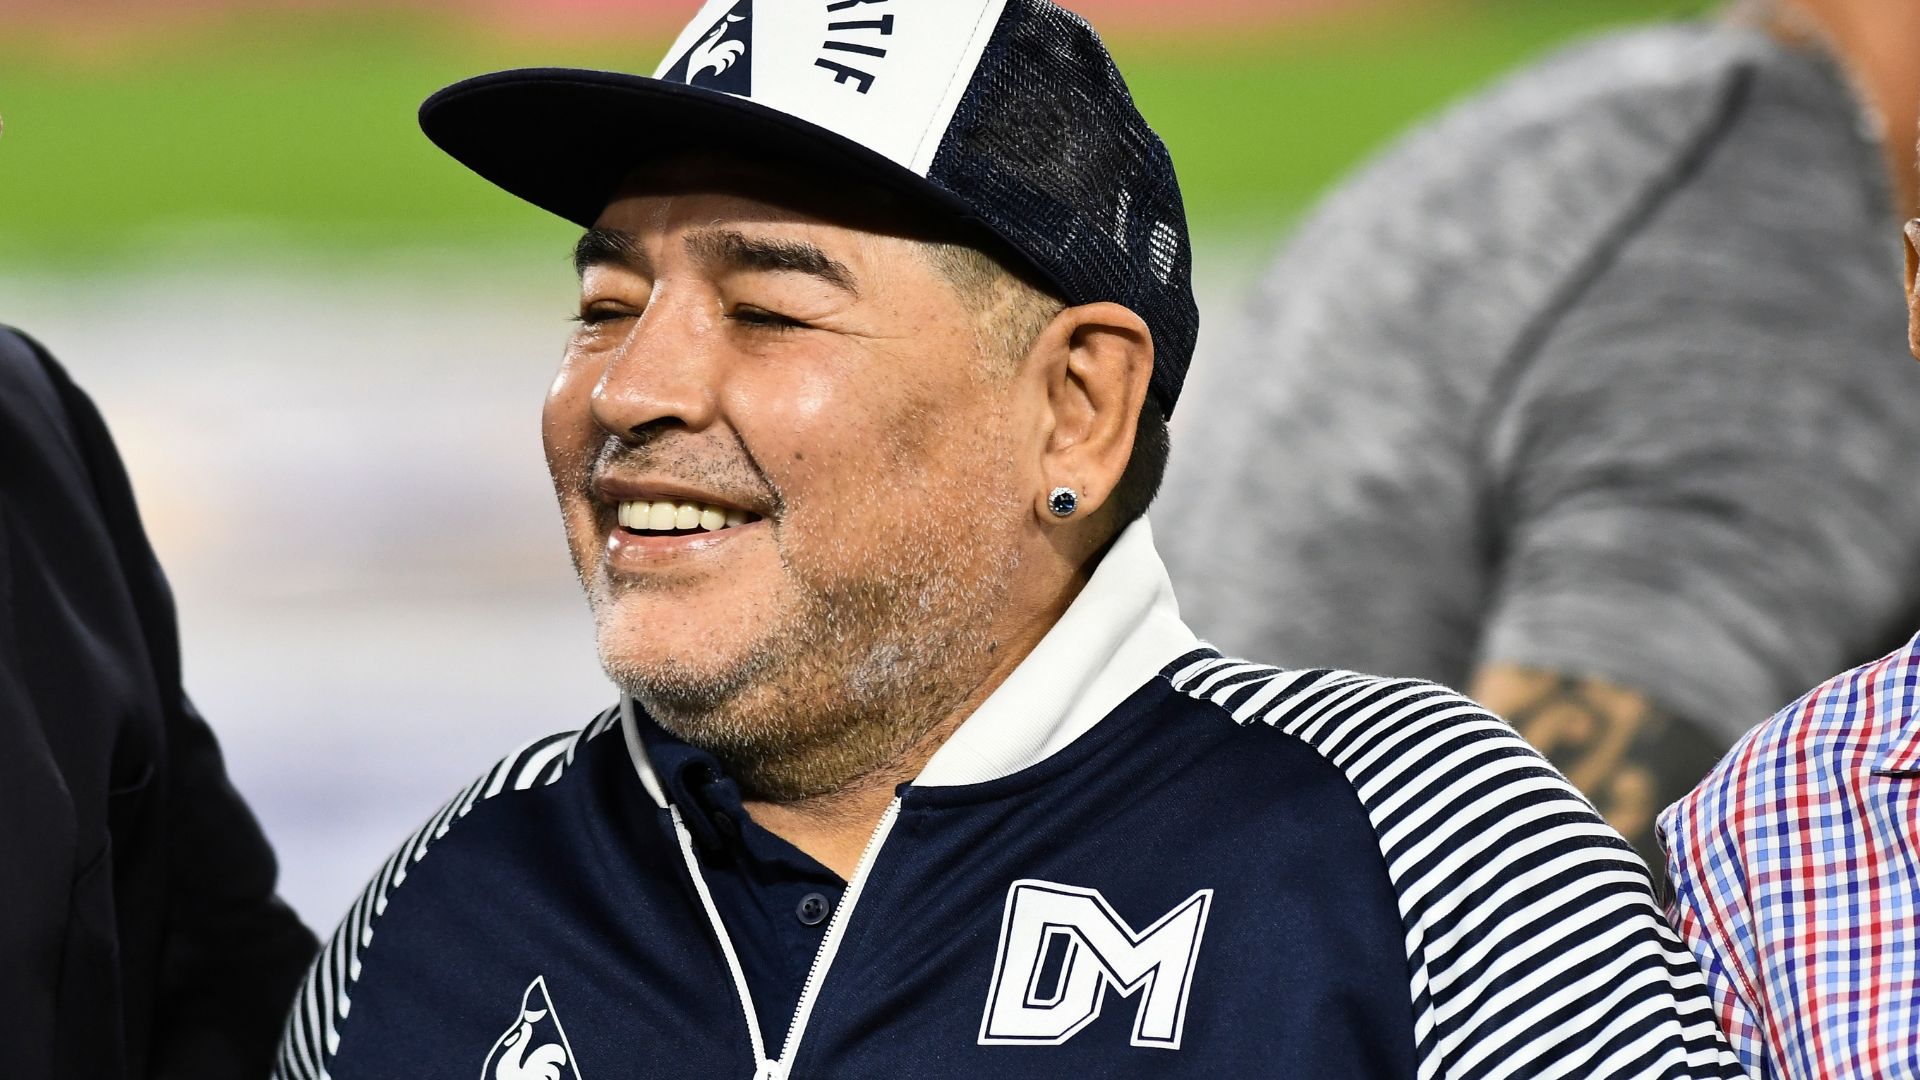 Maradona faria 62 anos neste domingo